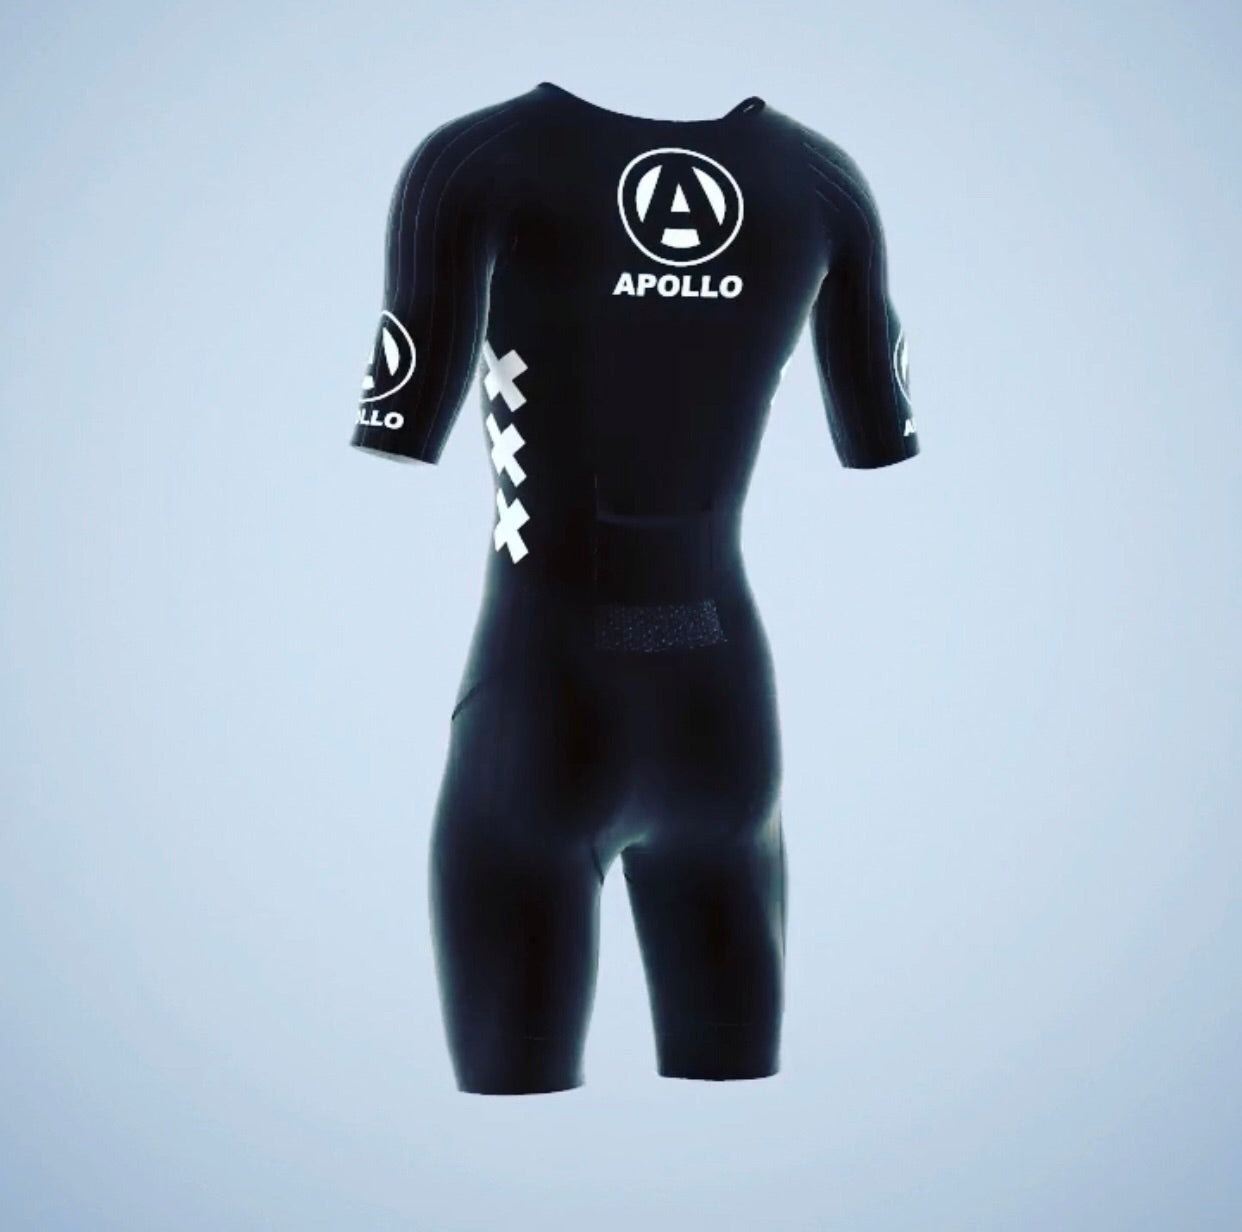 Apollo x Bioracer 2019 Season Triathlon Suit